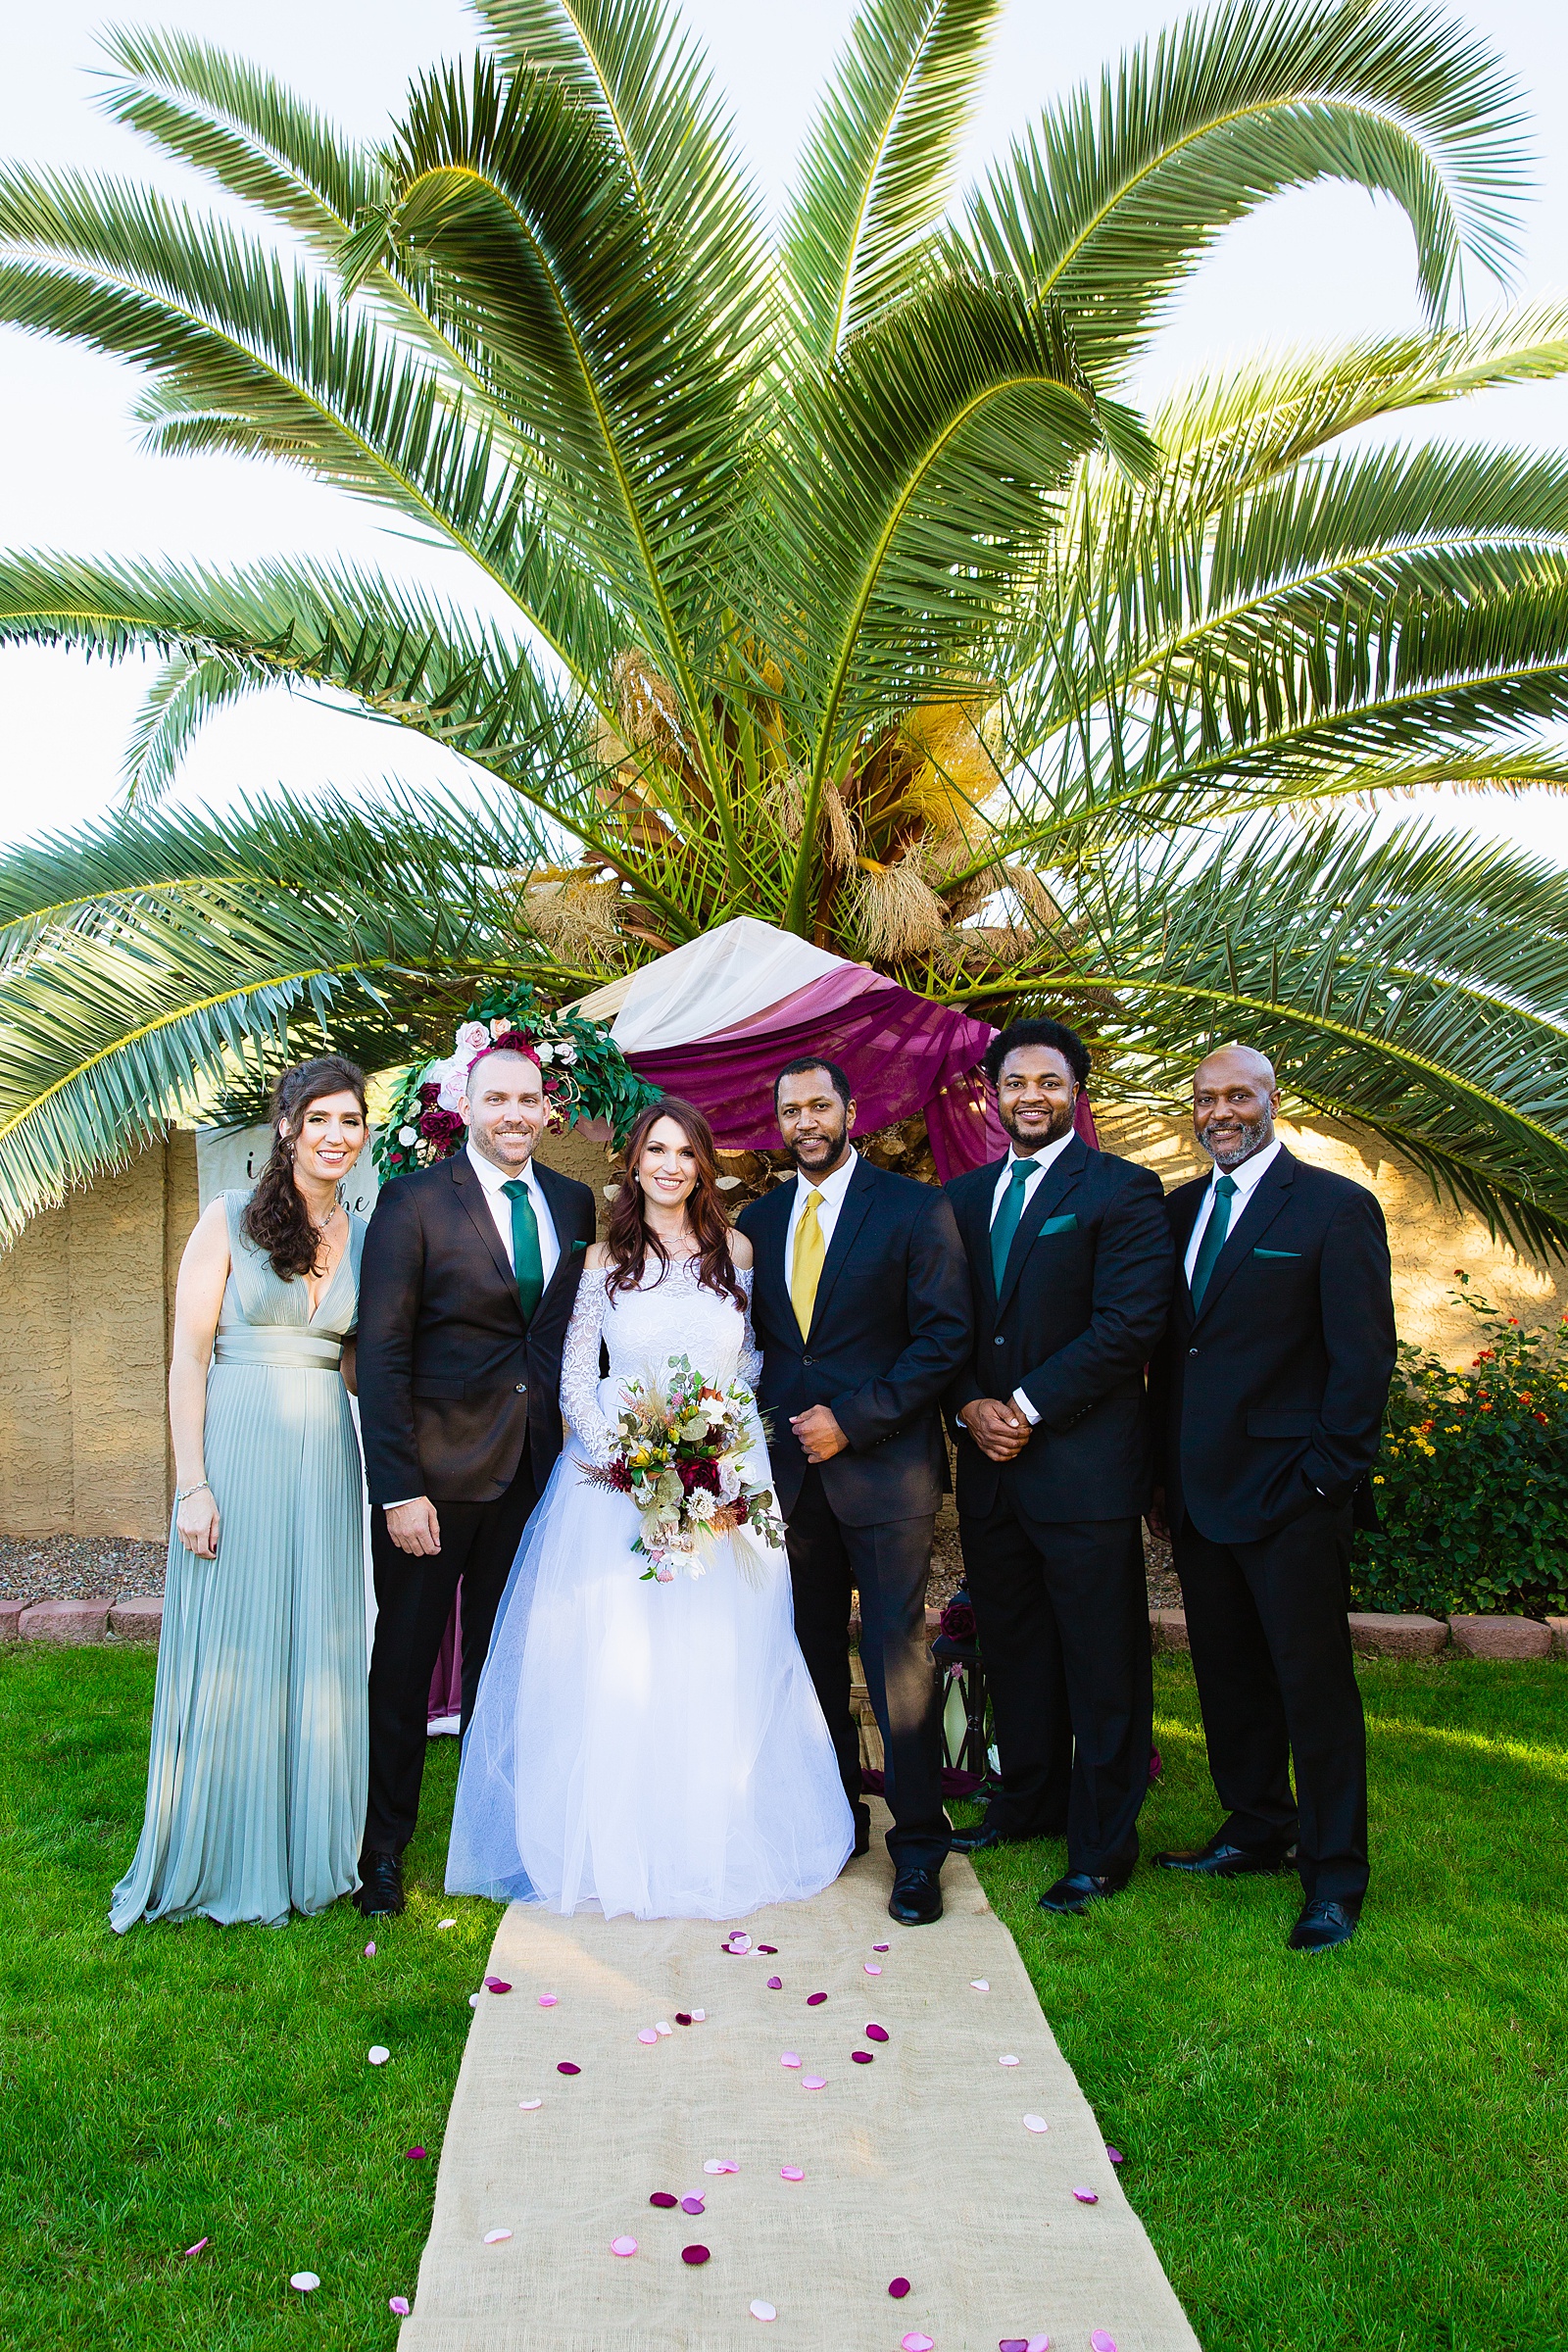 Mixed gender bridal party together at a Backyard Micro wedding by Arizona wedding photographer PMA Photography.